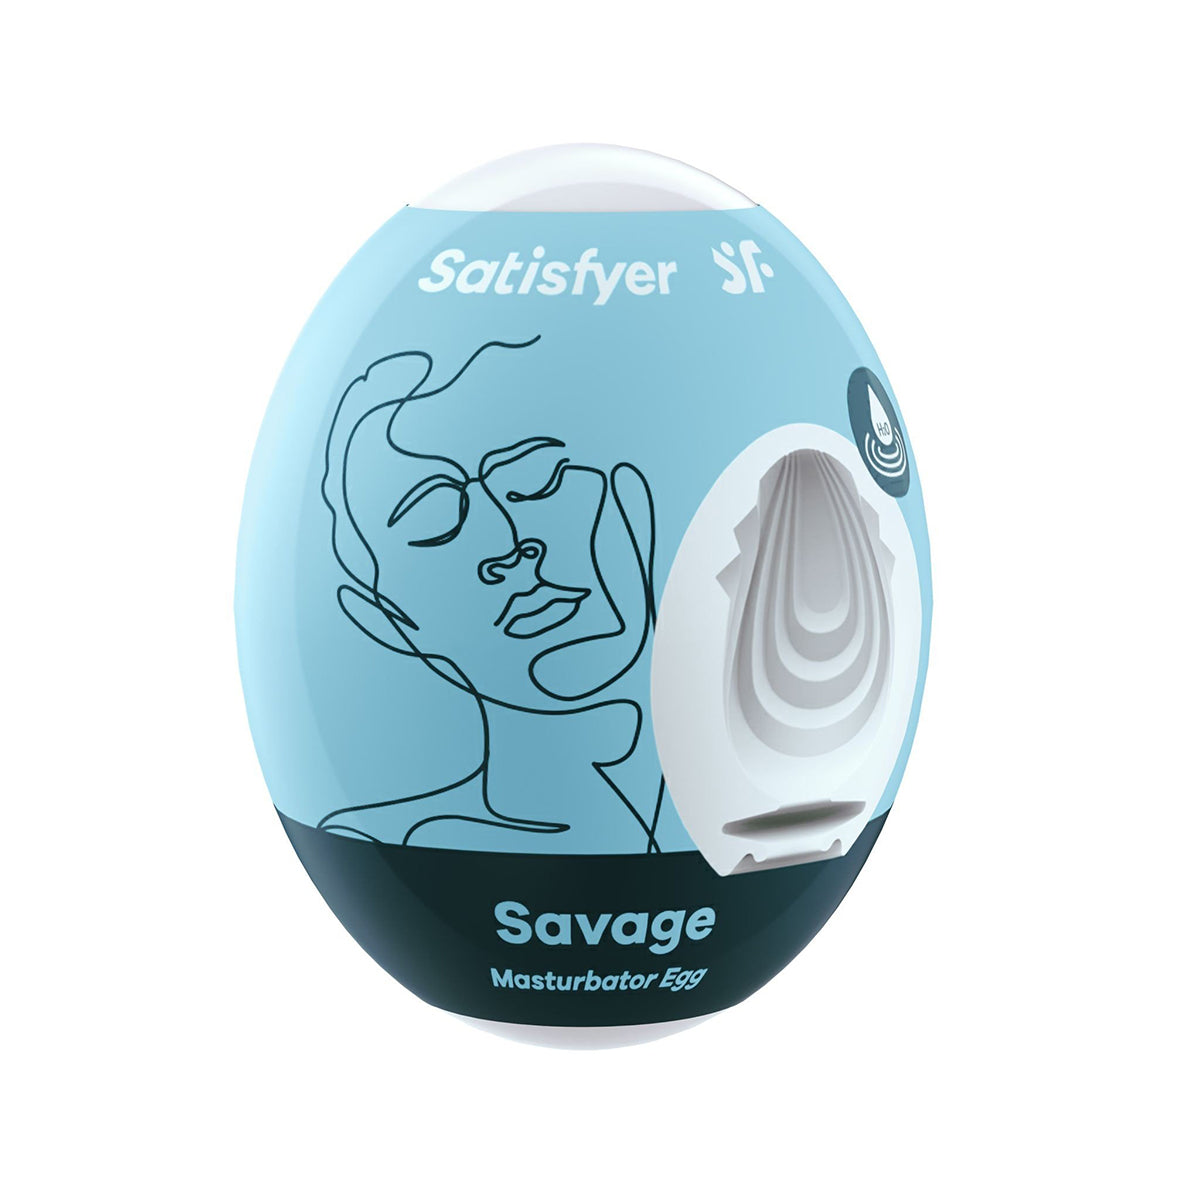 Satisfyer -  Masturbator Eggs – Set of 6 – Assorted Styles